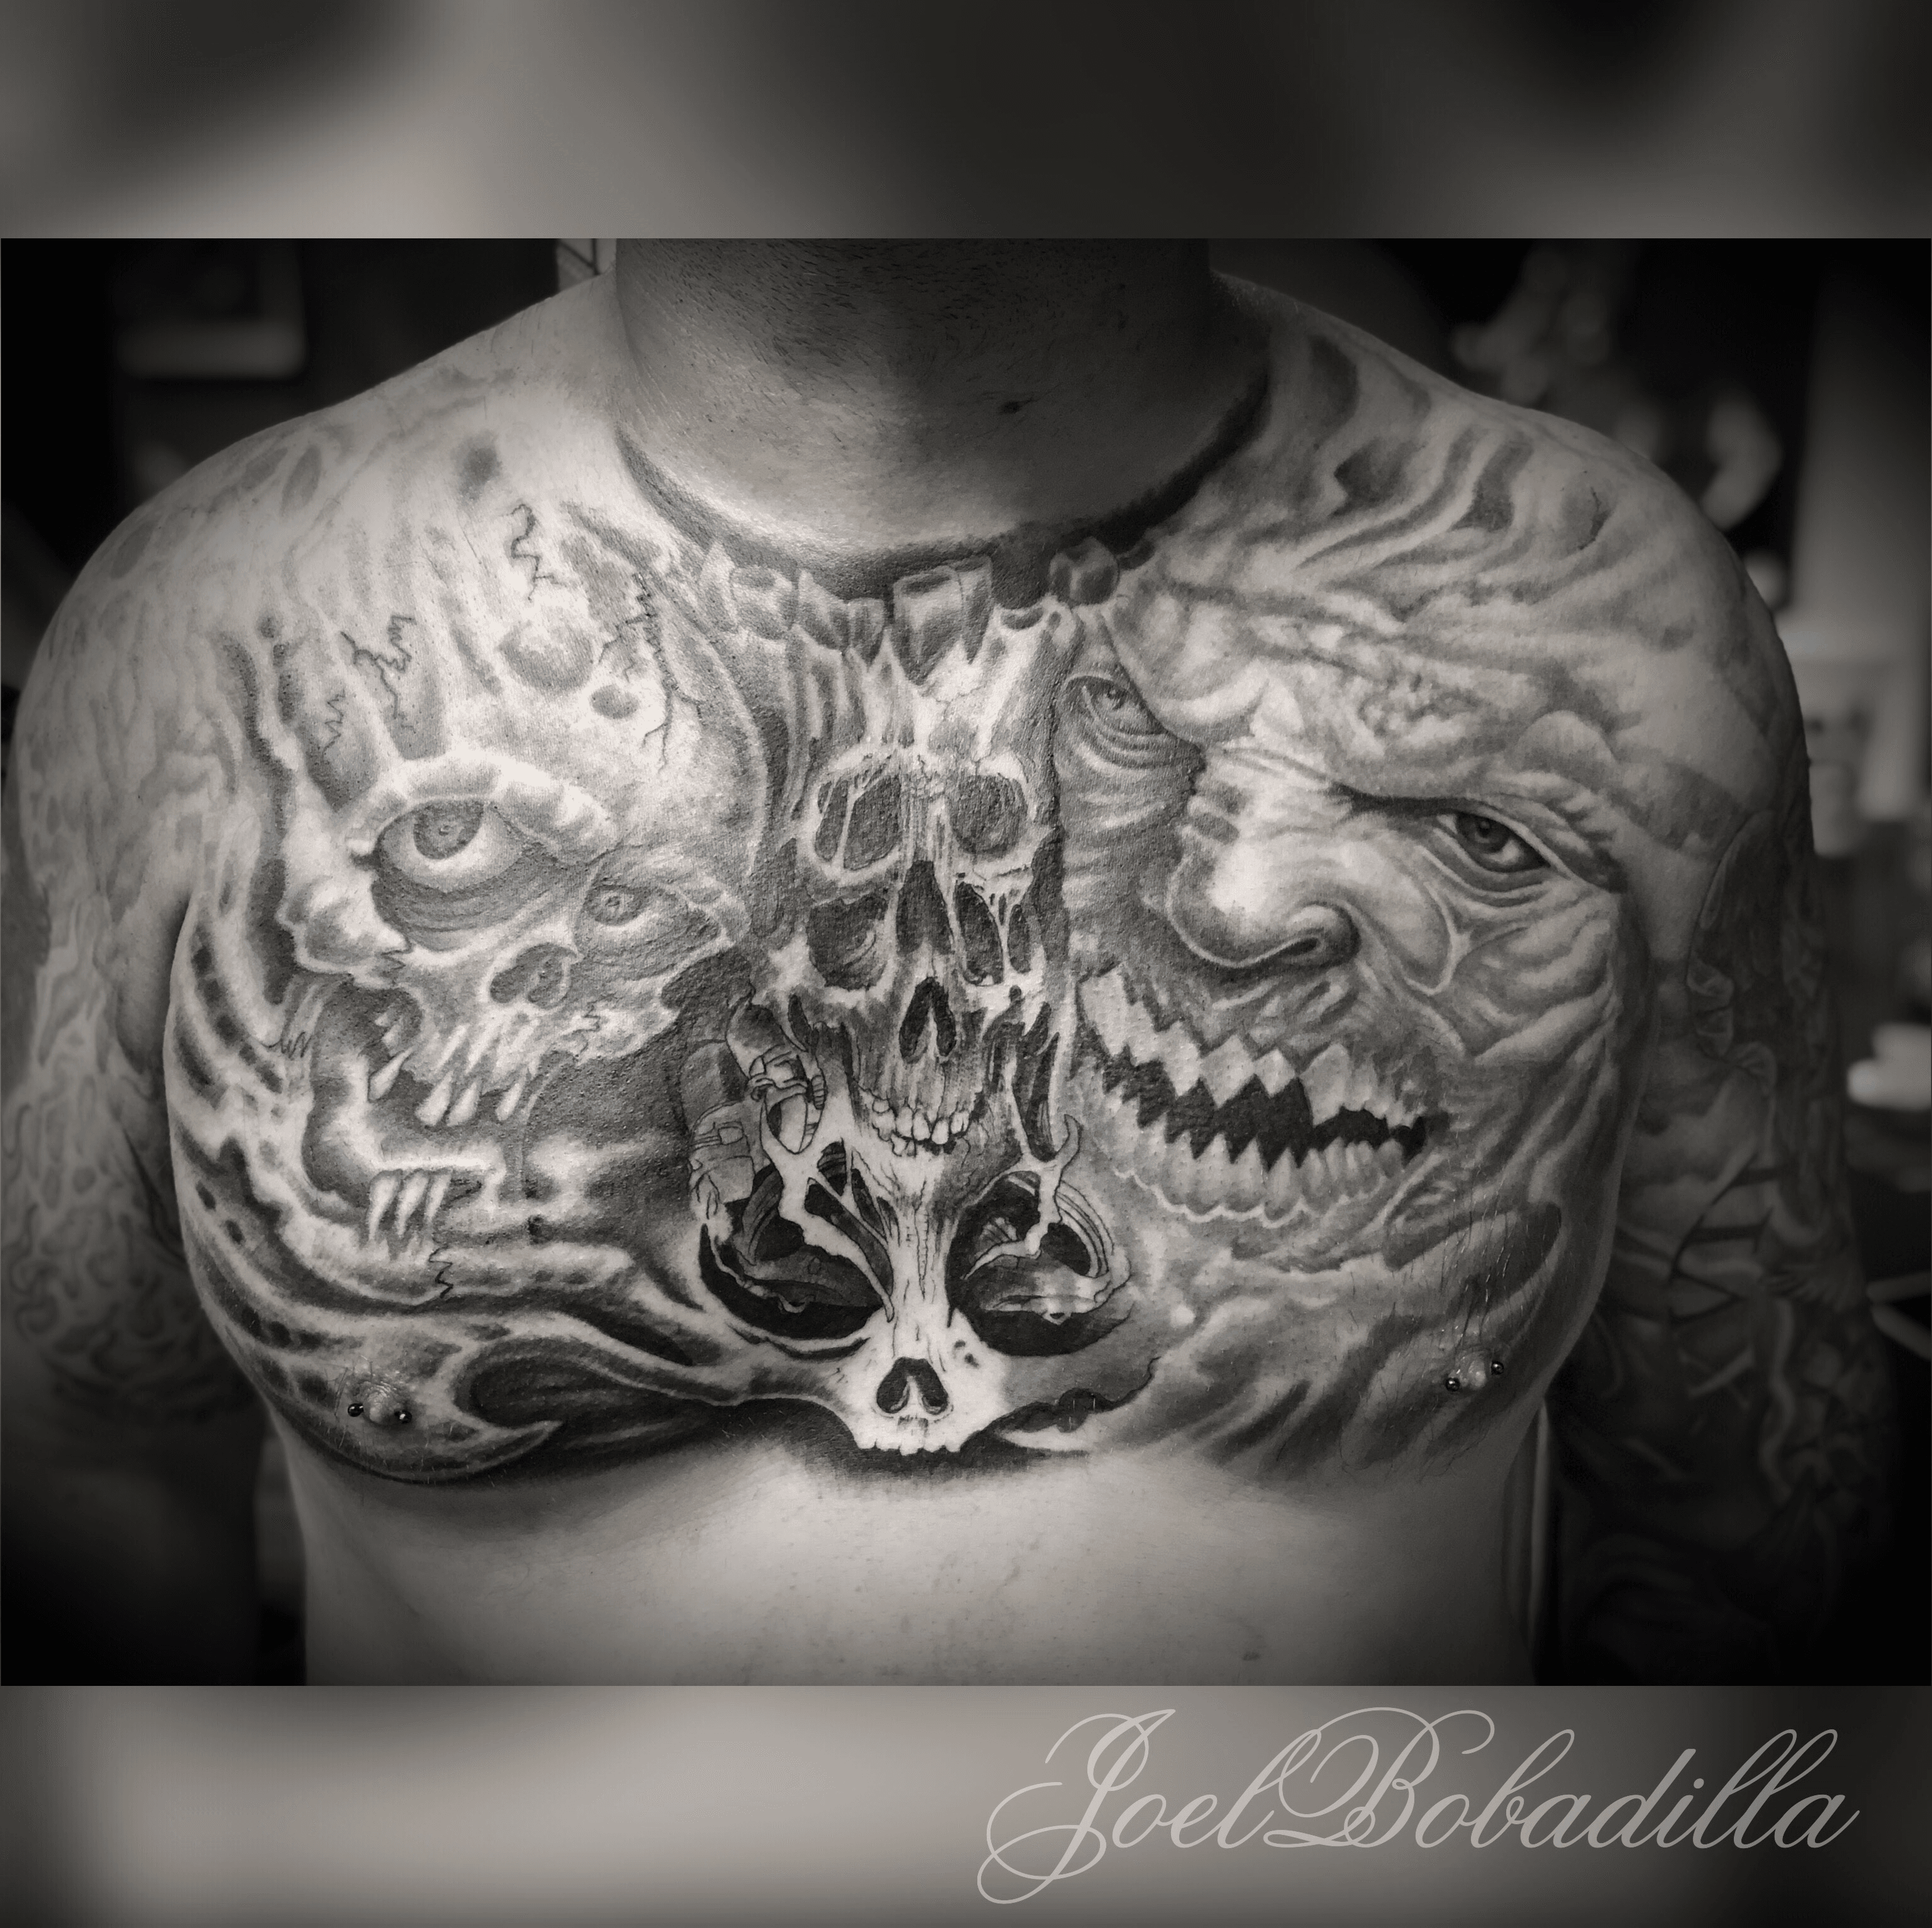 Tattoo uploaded by Joel Bobadilla • Cover Up under boob progress